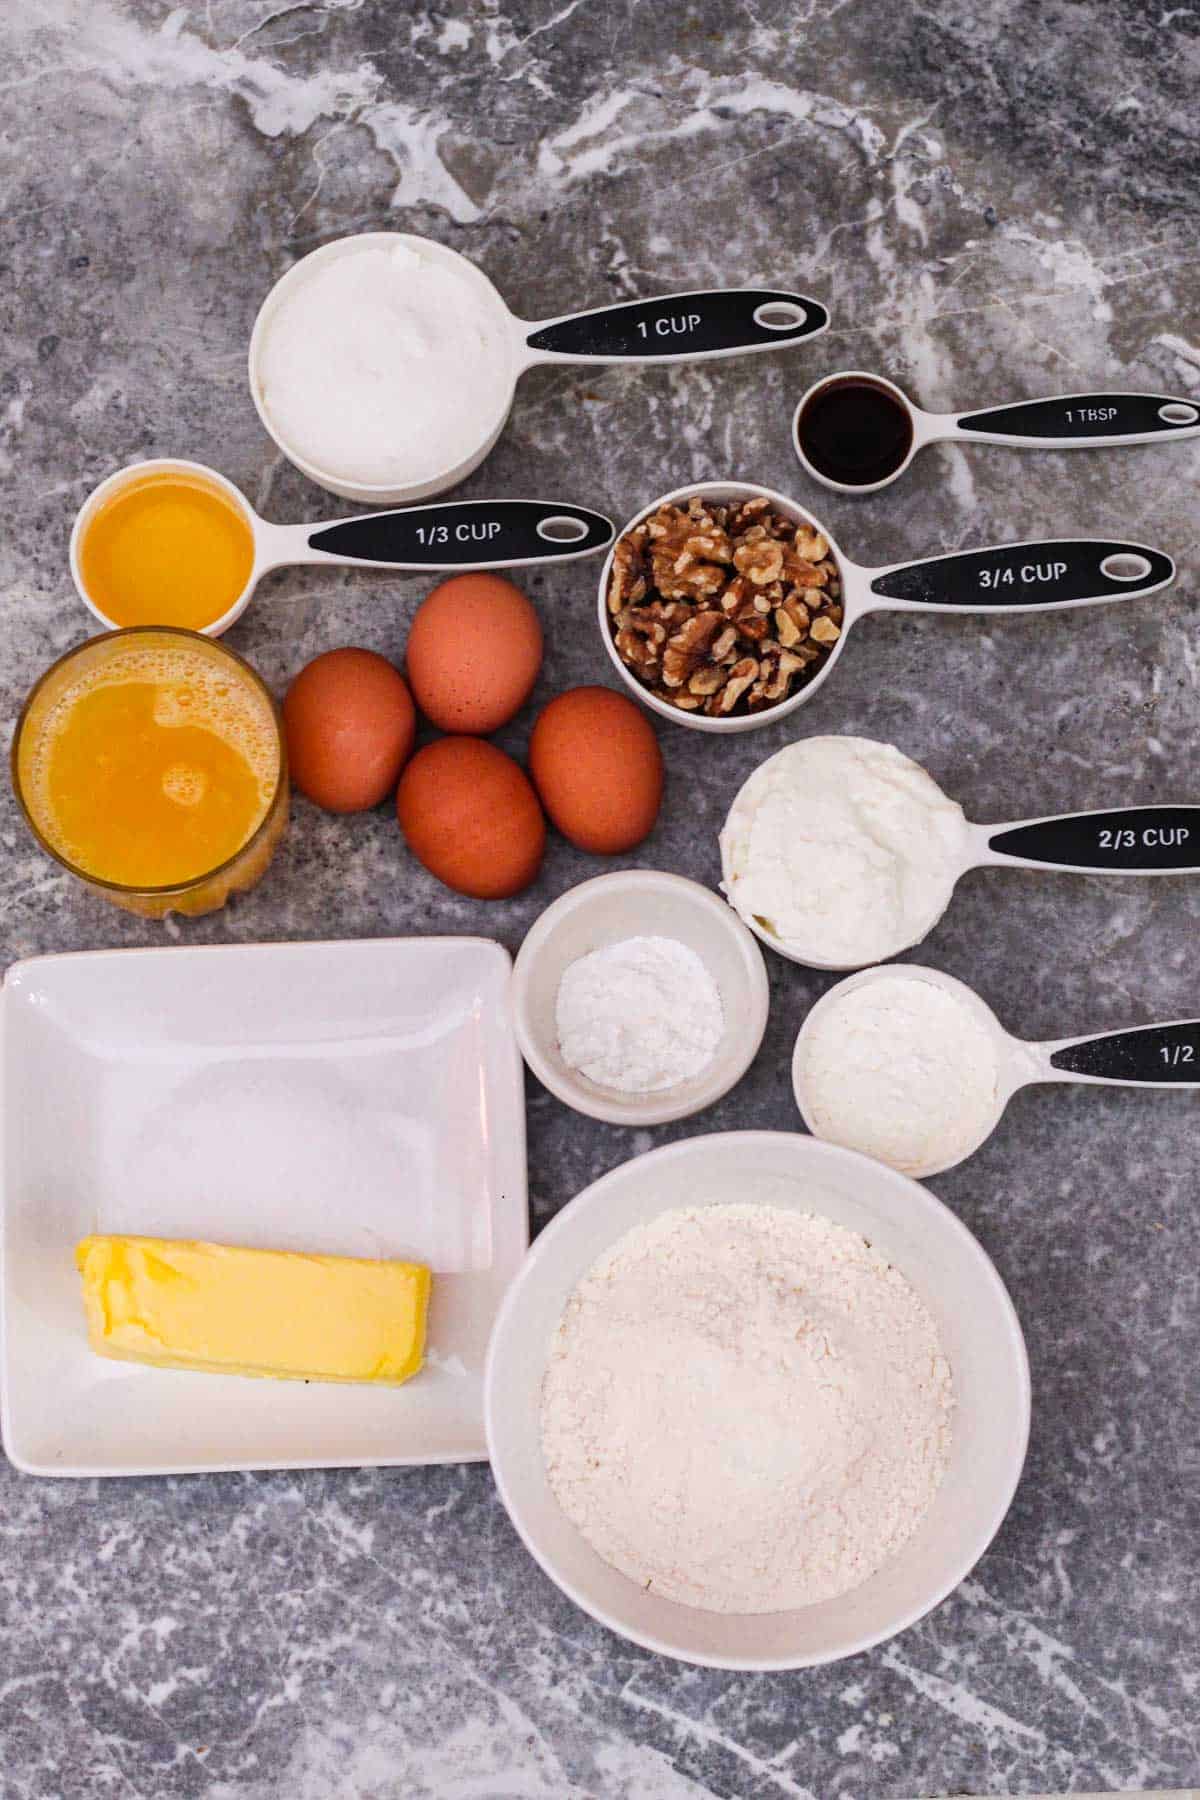 Orange bundt cake ingredients in measuring cups or spoons: Flour, butter, baking powder, cornstarch, yogurt, eggs, walnuts, orange juice, avocado oil, sugar and vanilla extract.